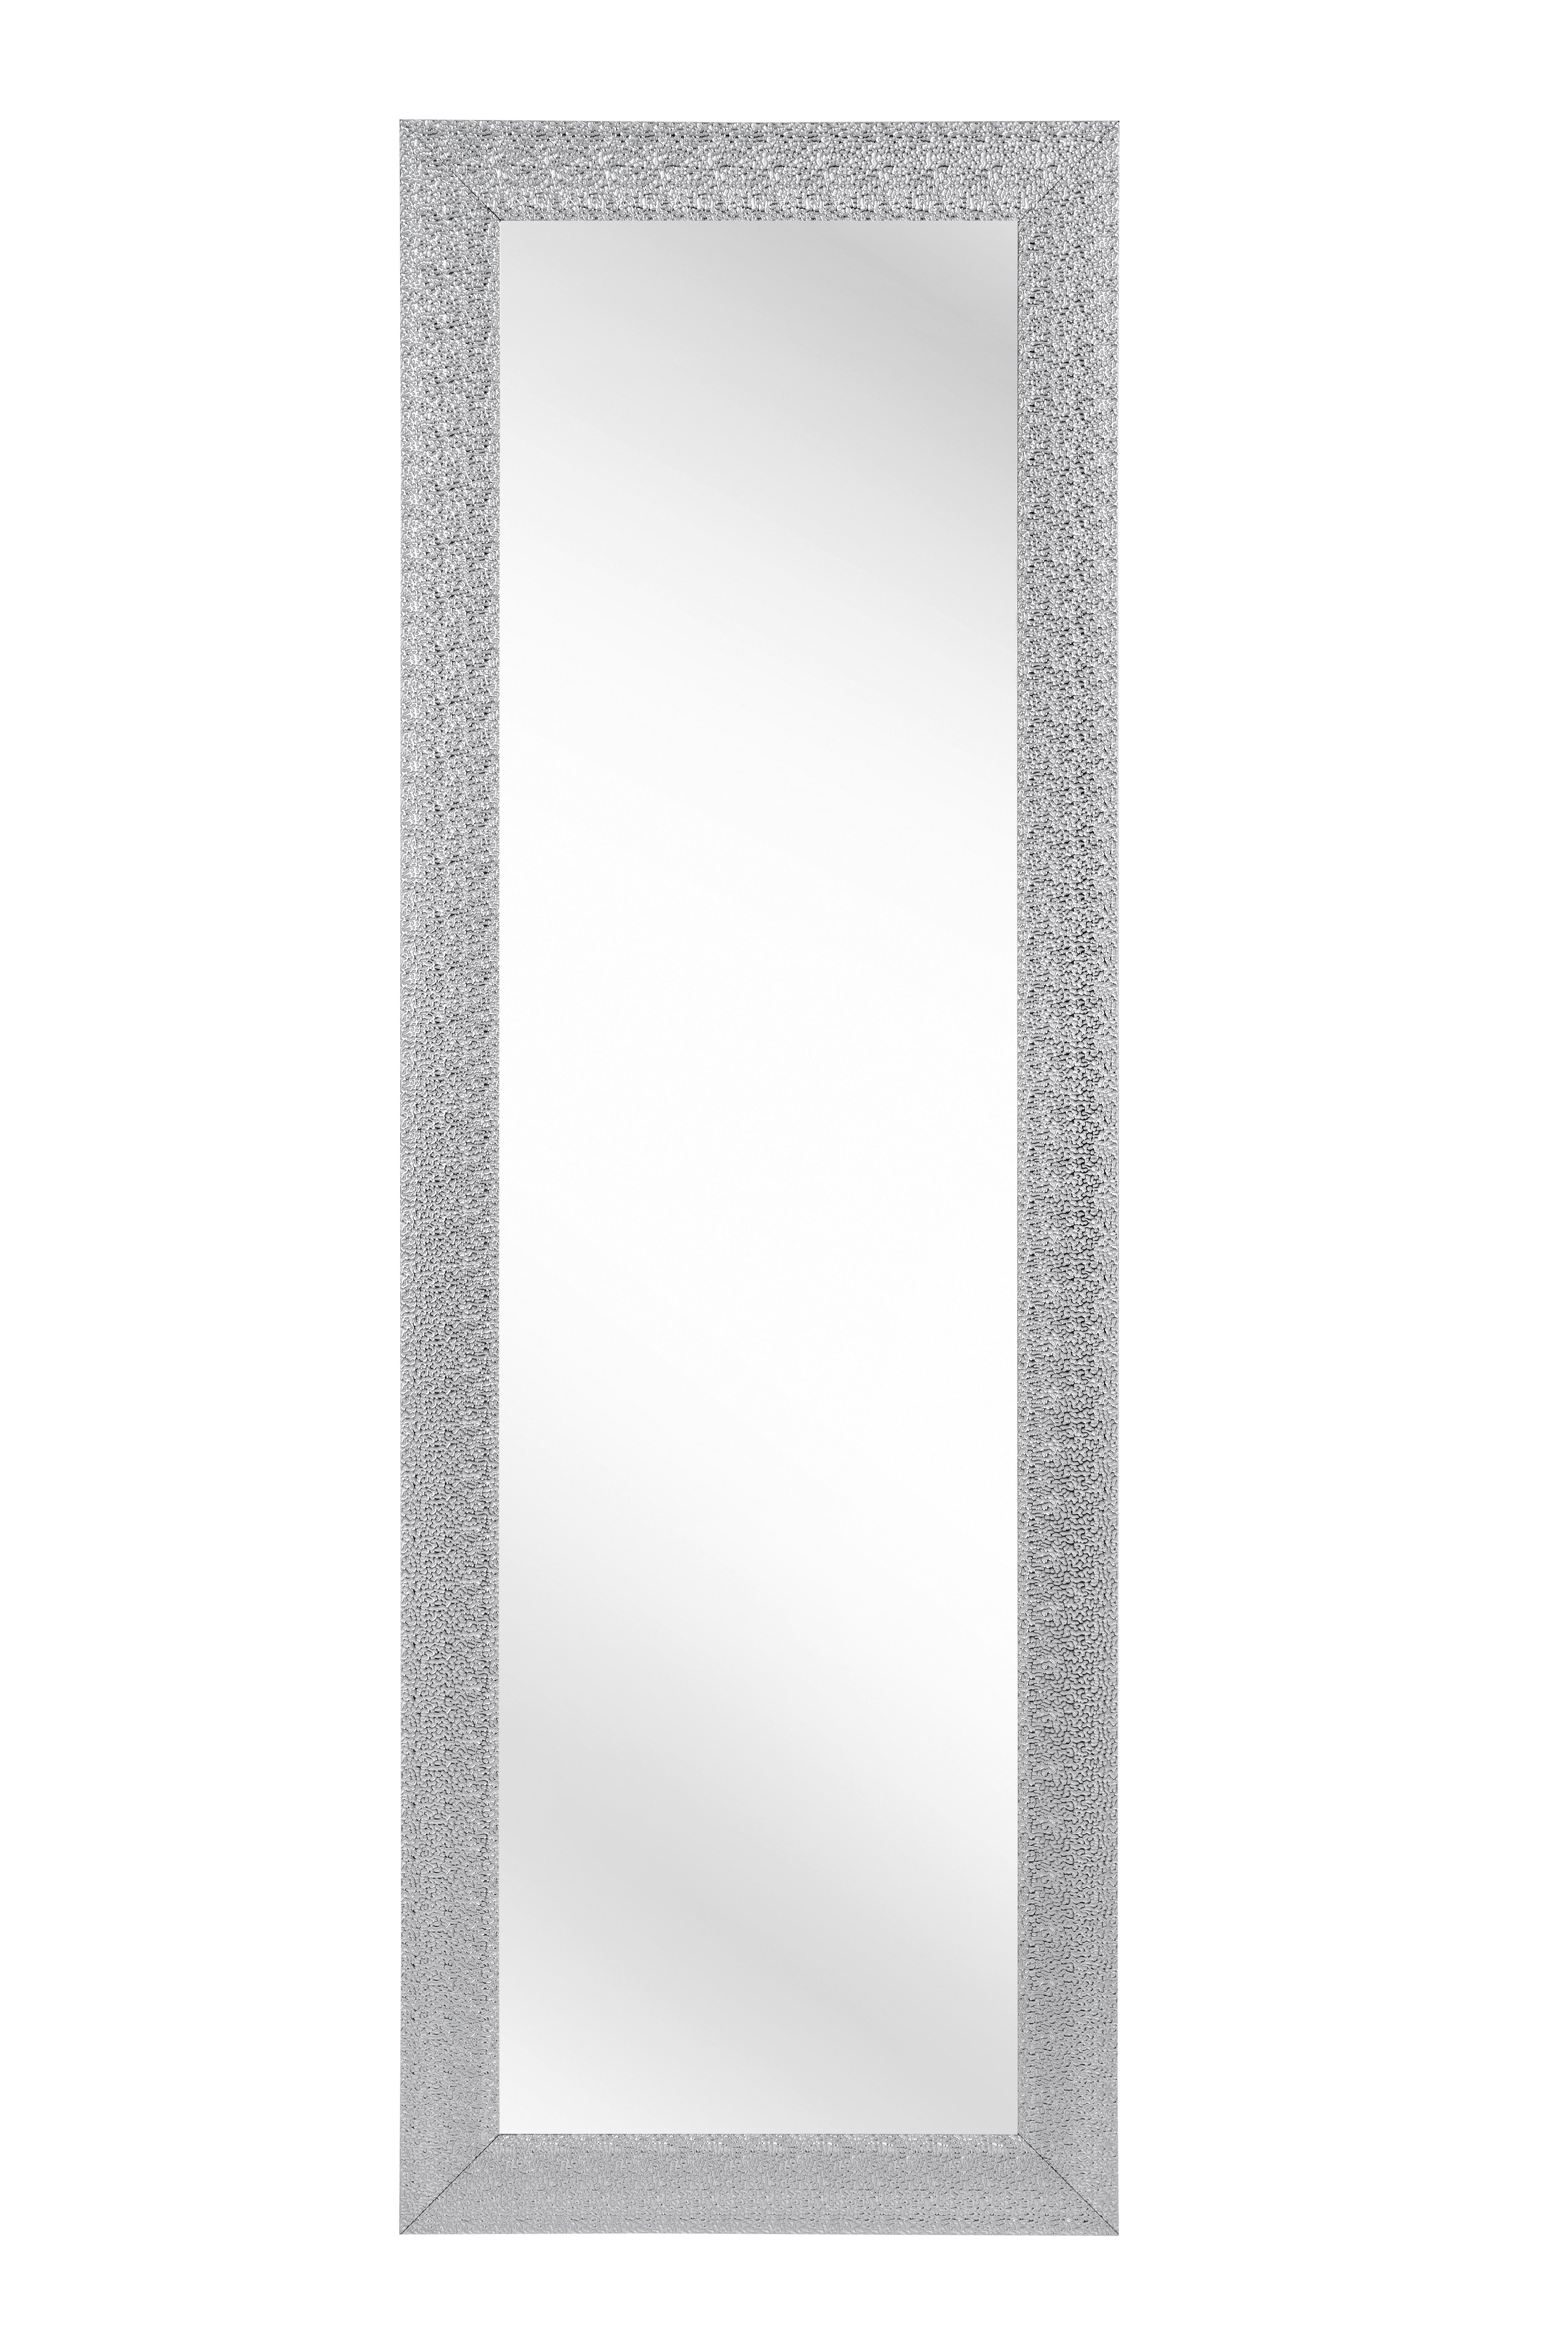 WANDSPIEGEL 50/150/2 cm  - Silberfarben, Lifestyle, Glas/Kunststoff (50/150/2cm) - Carryhome